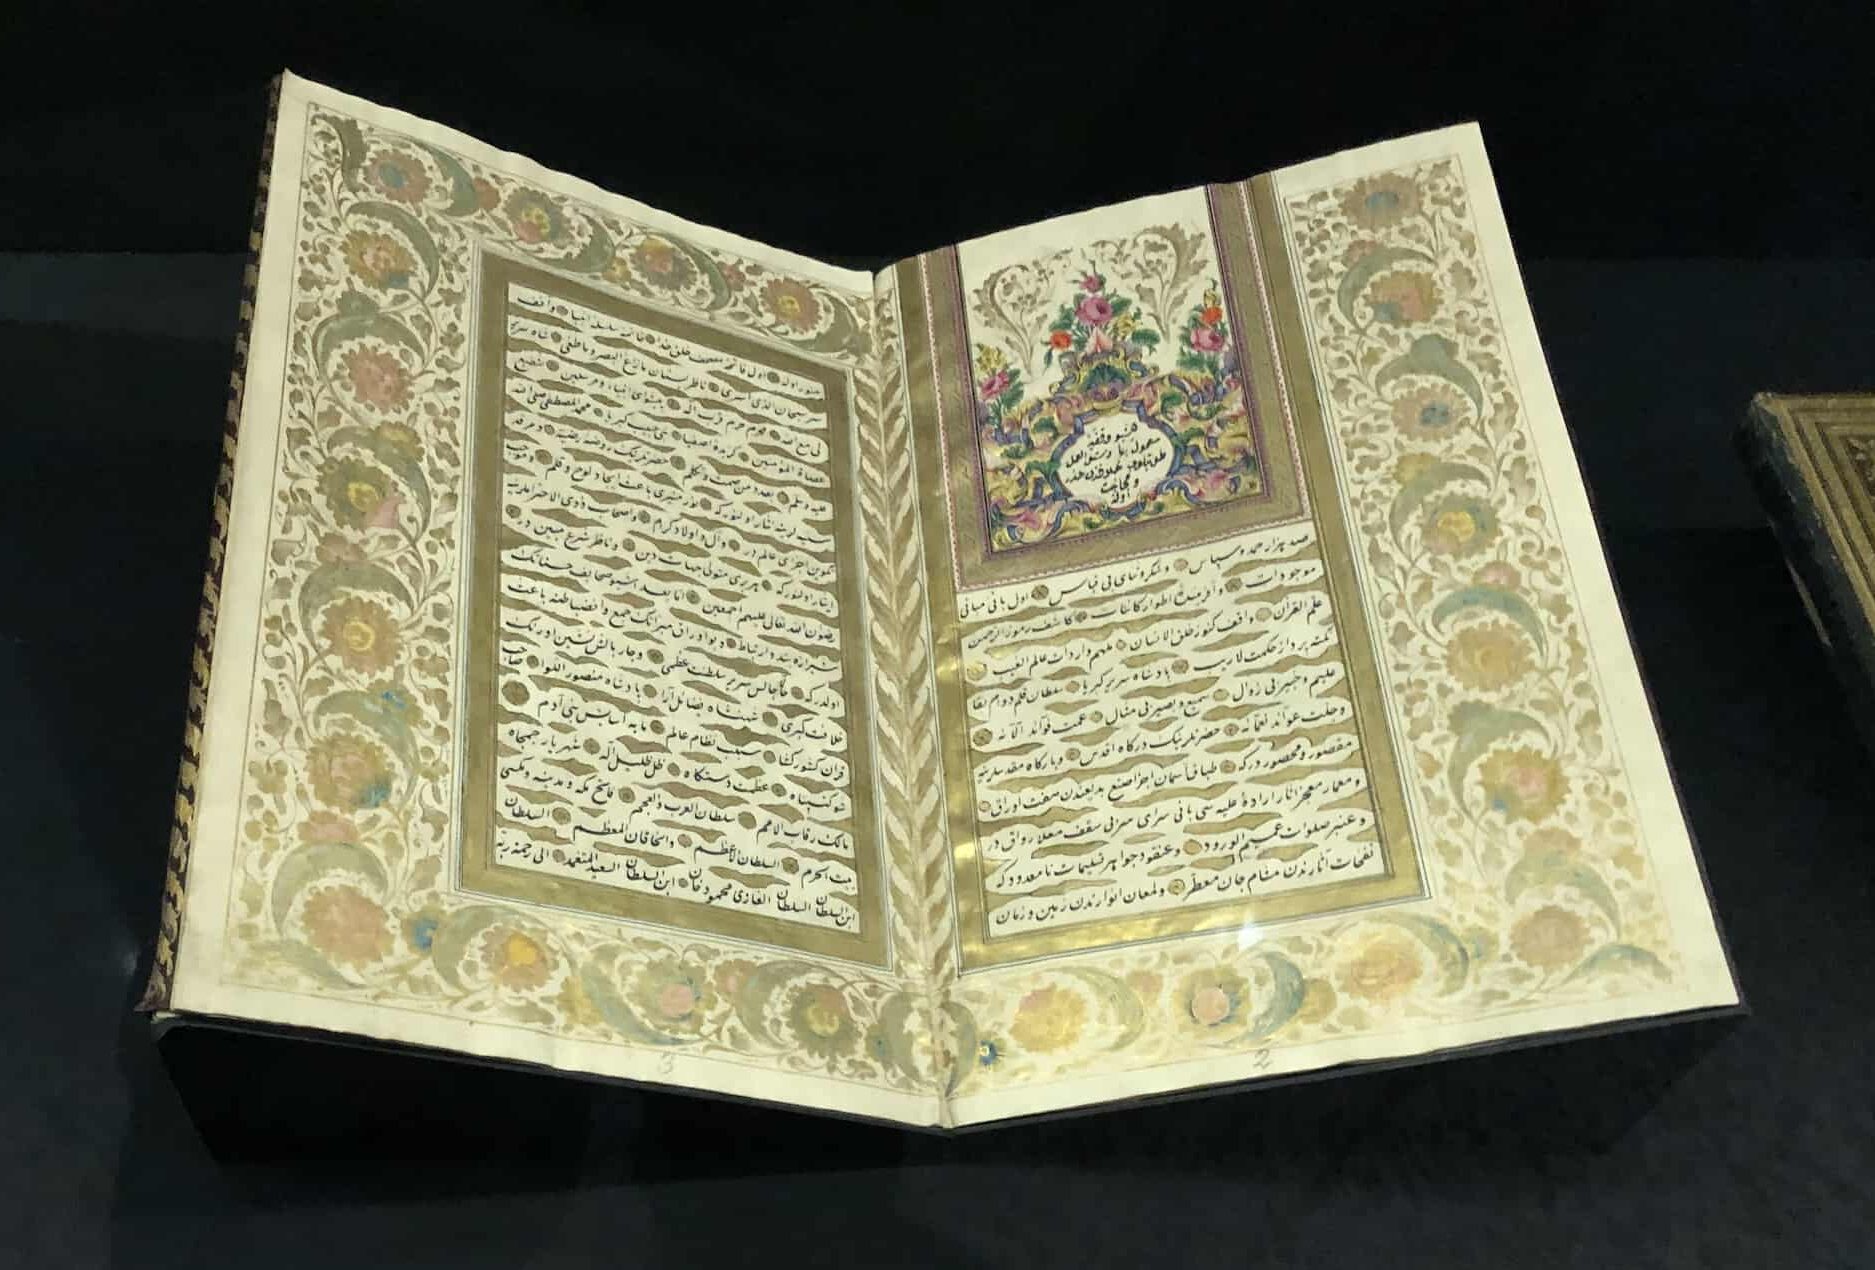 Endowment deed of Sultan Mahmud II for the Nakşidil Valide Sultan Foundation dated 1818-1819